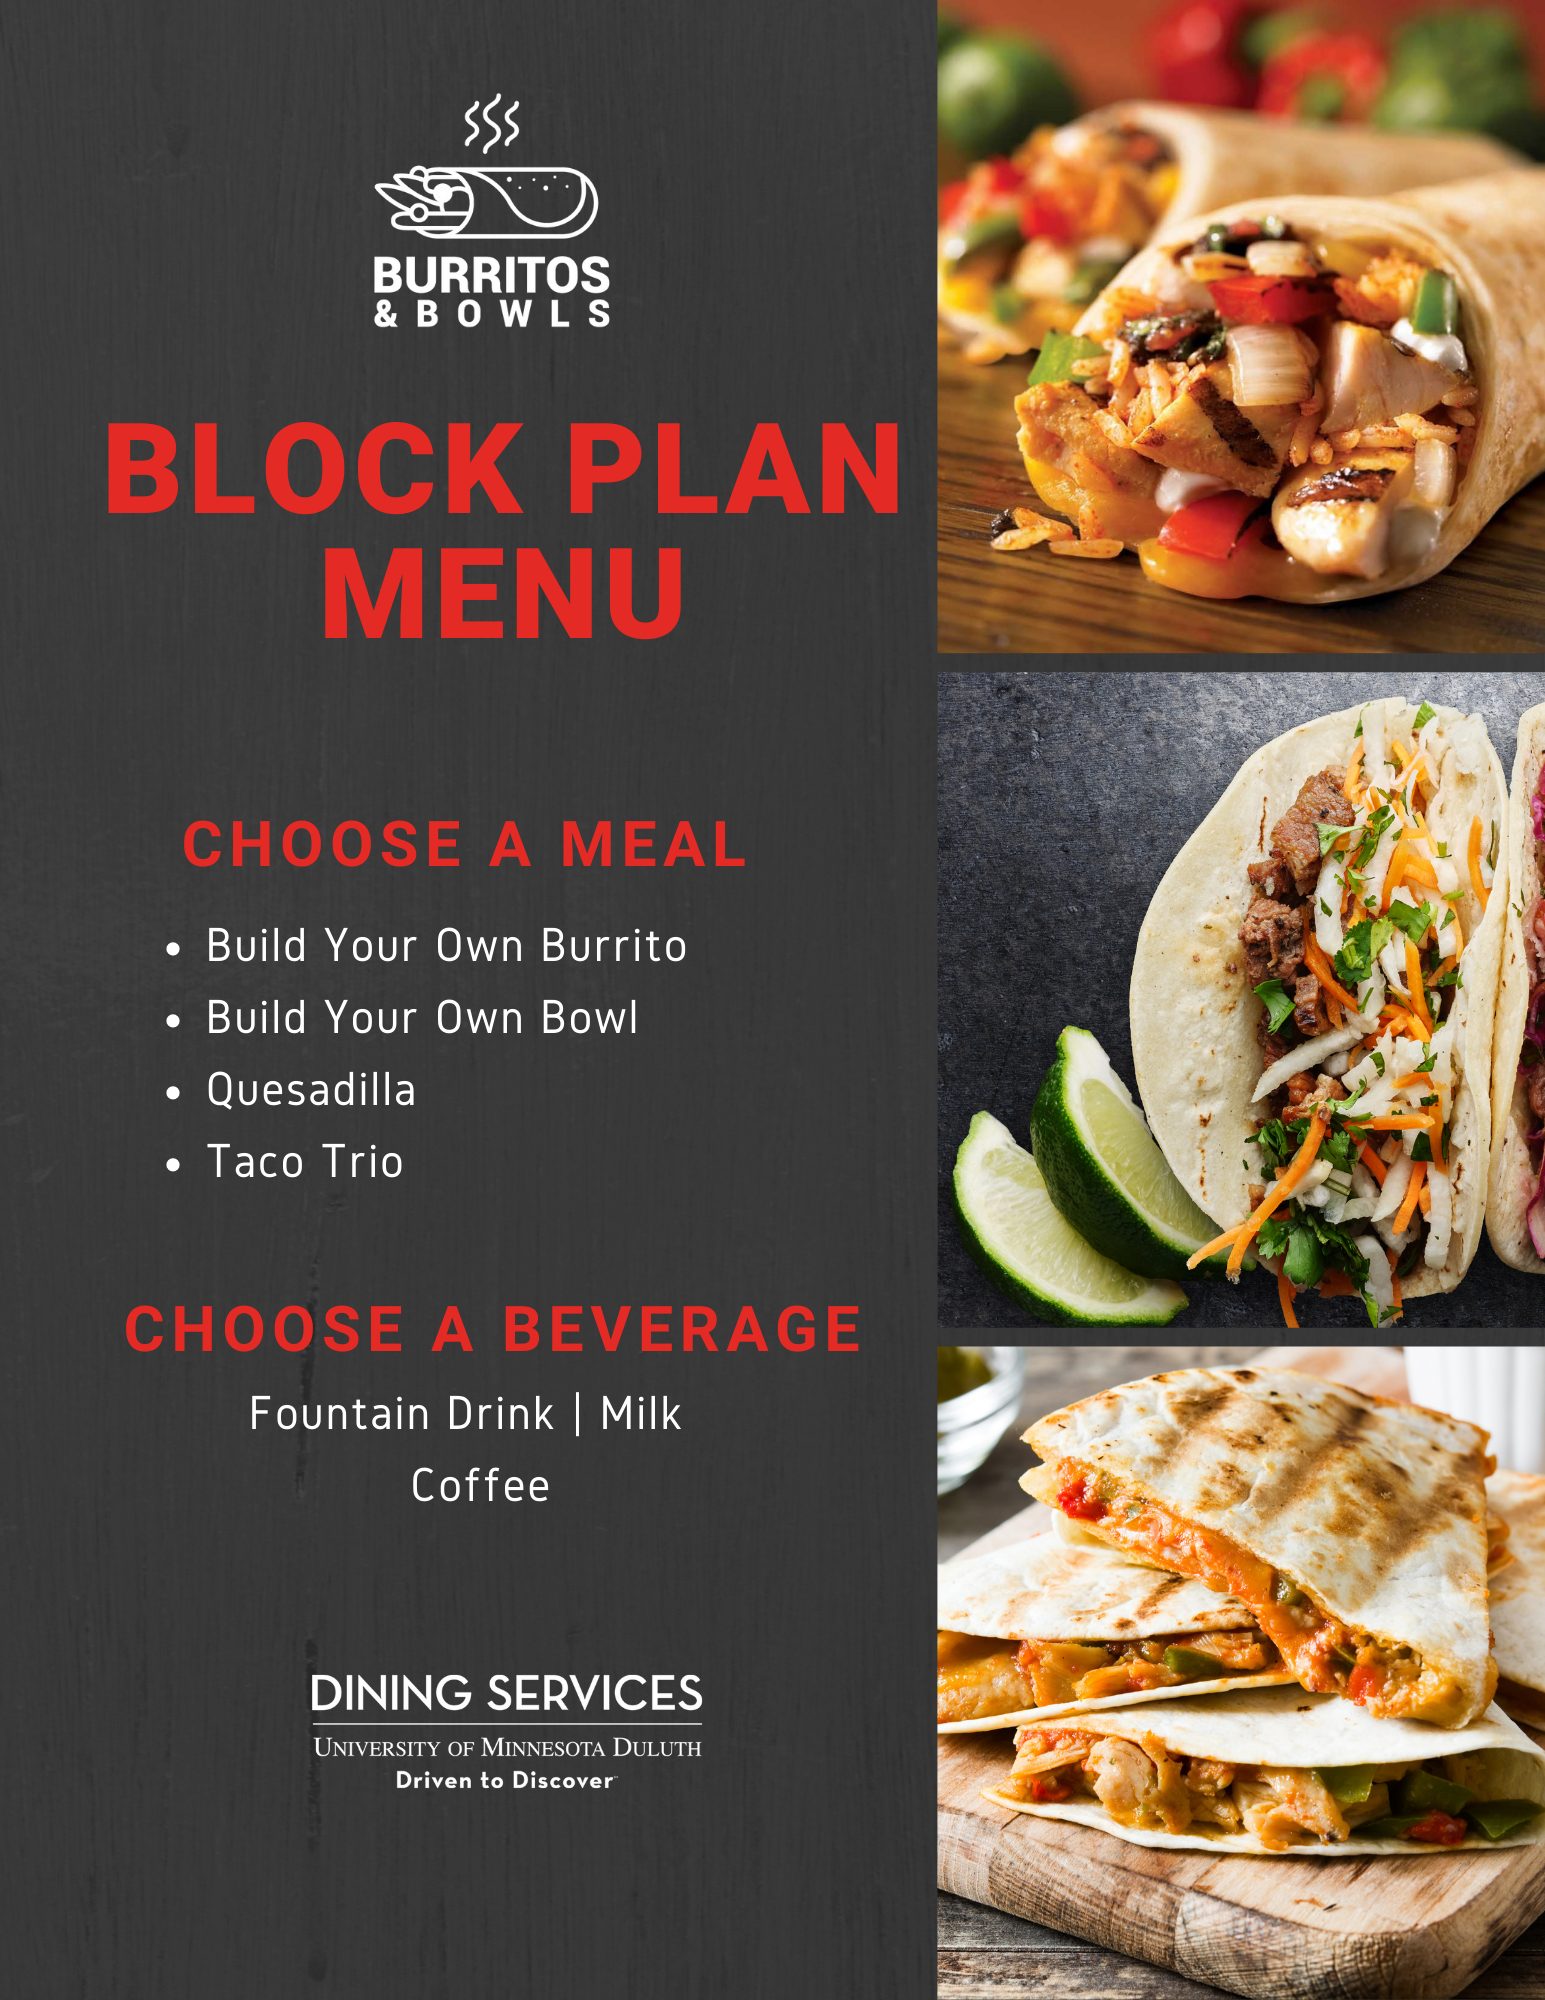 Burritos & Bowls block plan menu